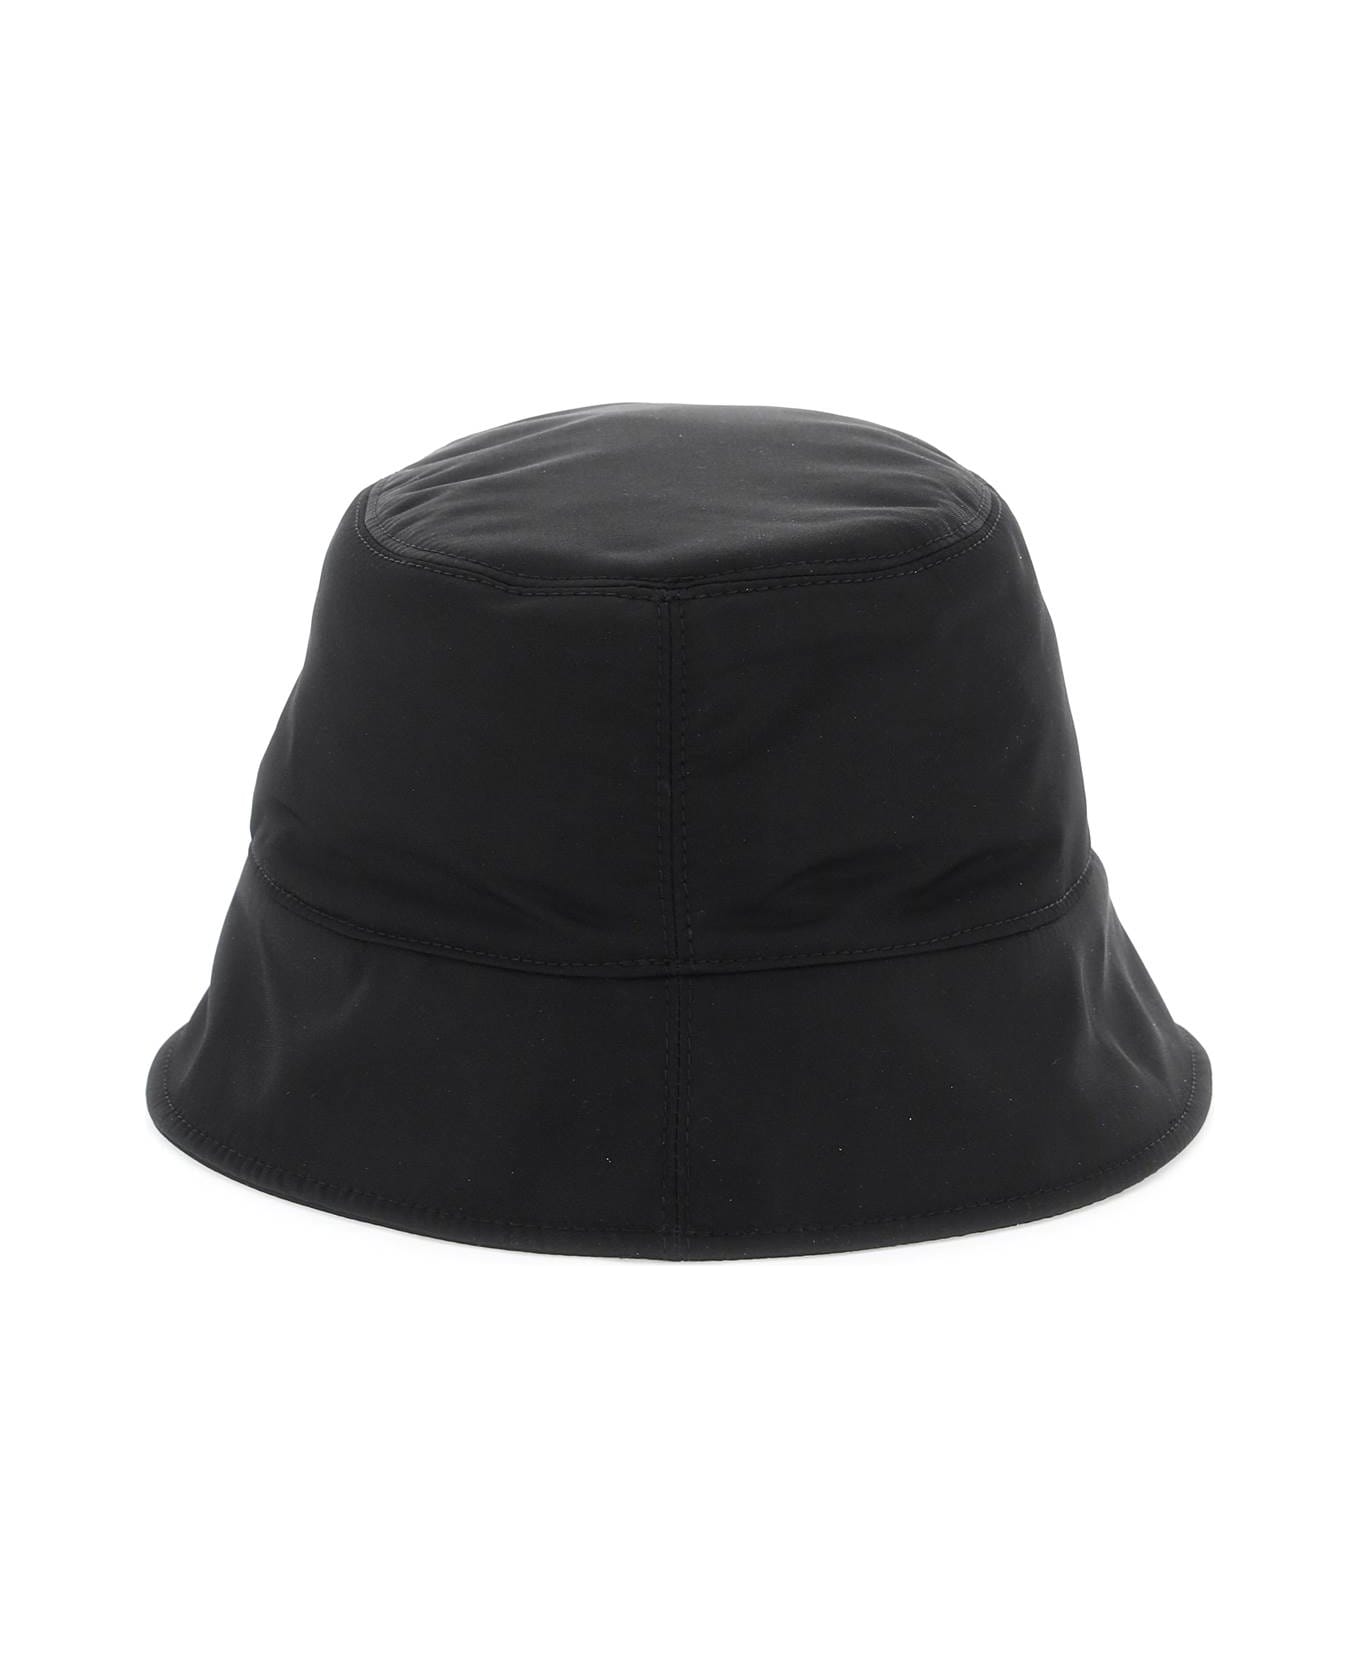 Off-White Arrow Bucket Hat - BLACK WHITE (Black) ヘアアクセサリー